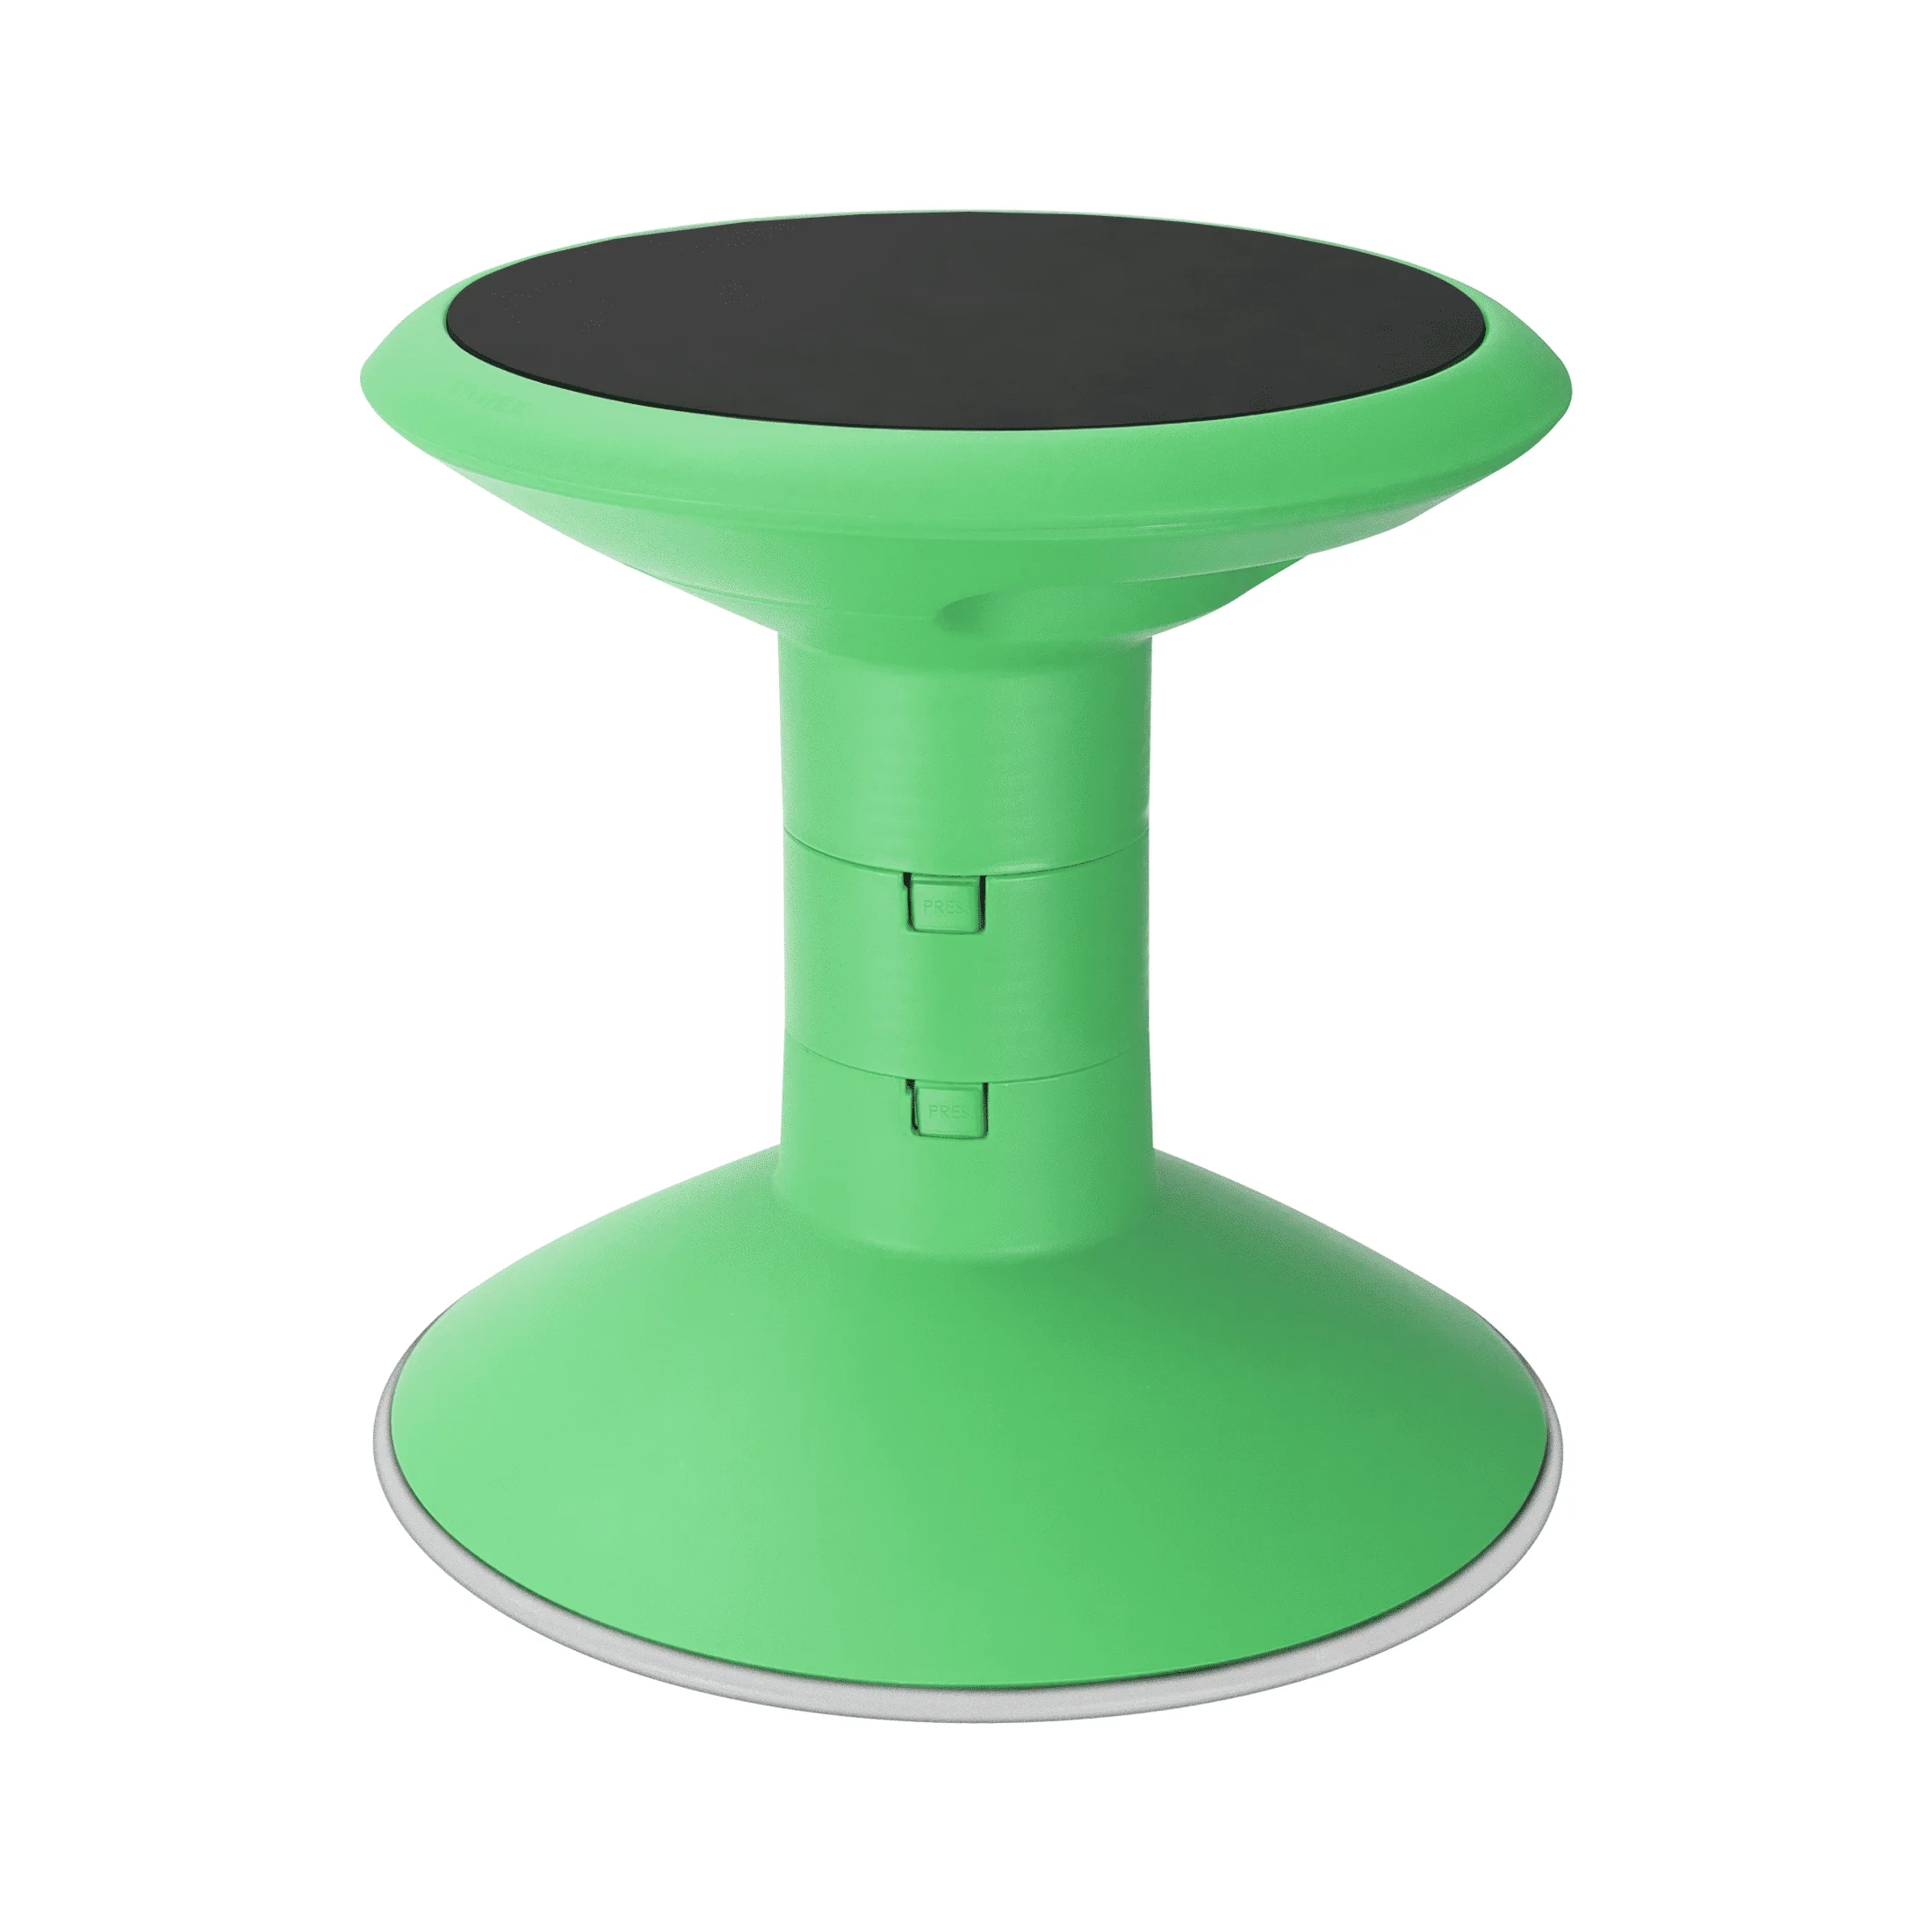 Storex פלסטיק לנענע שרפרף מתכוונן 12-18 סנטימטר גובה מושב ללא משענת, ירוק